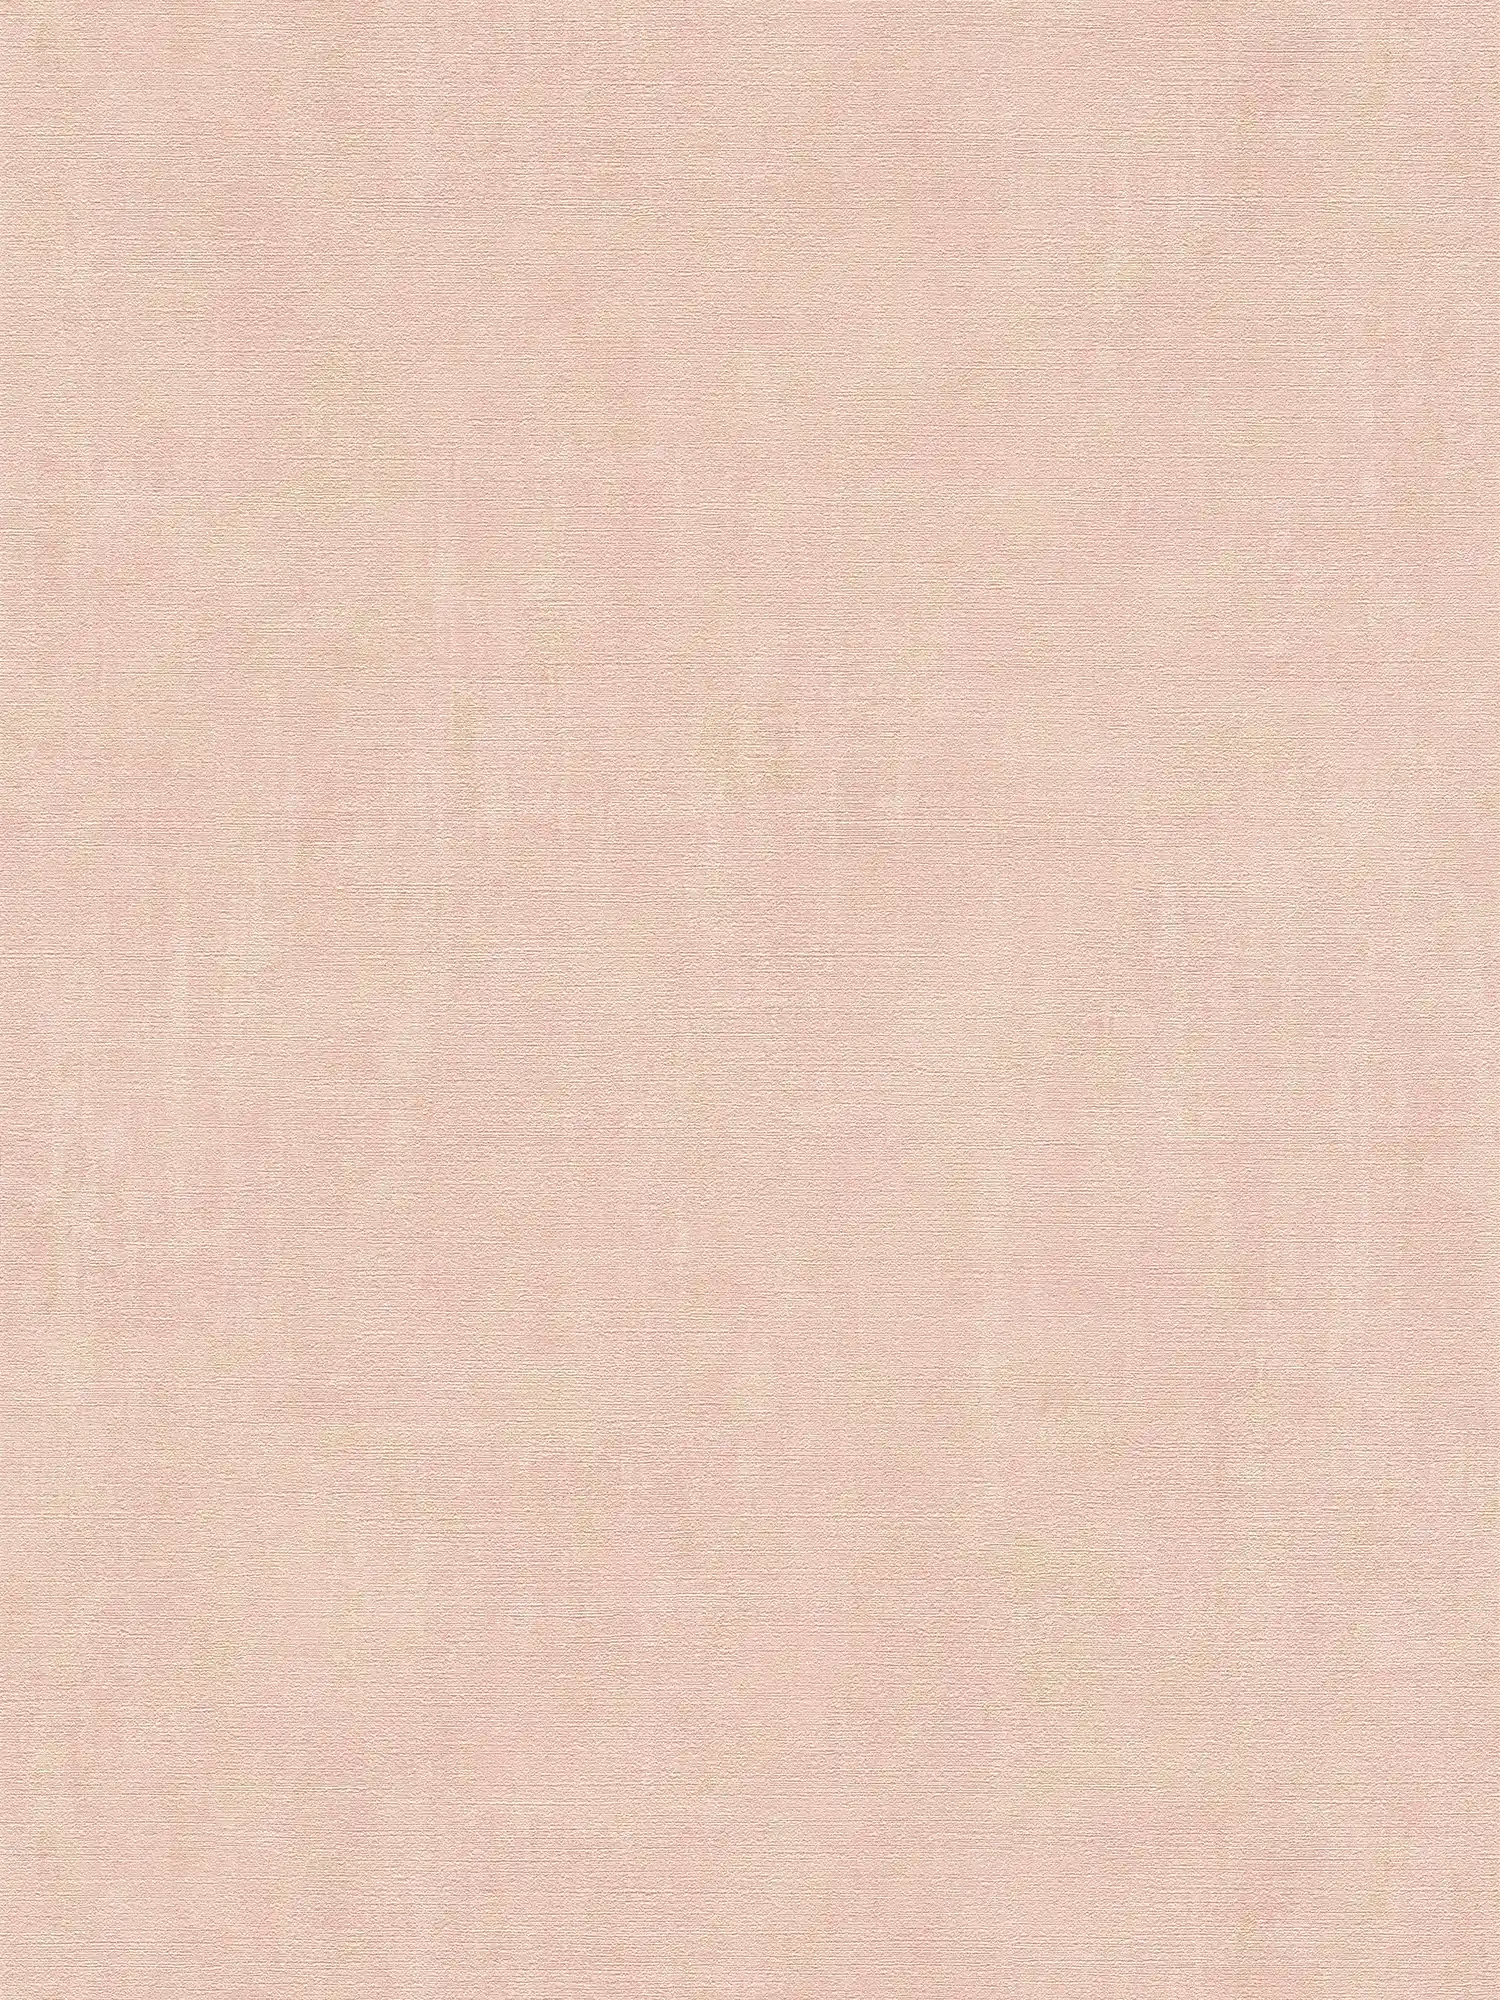 Pink wallpaper gold accents mottled metallic effect - metallic, pink
